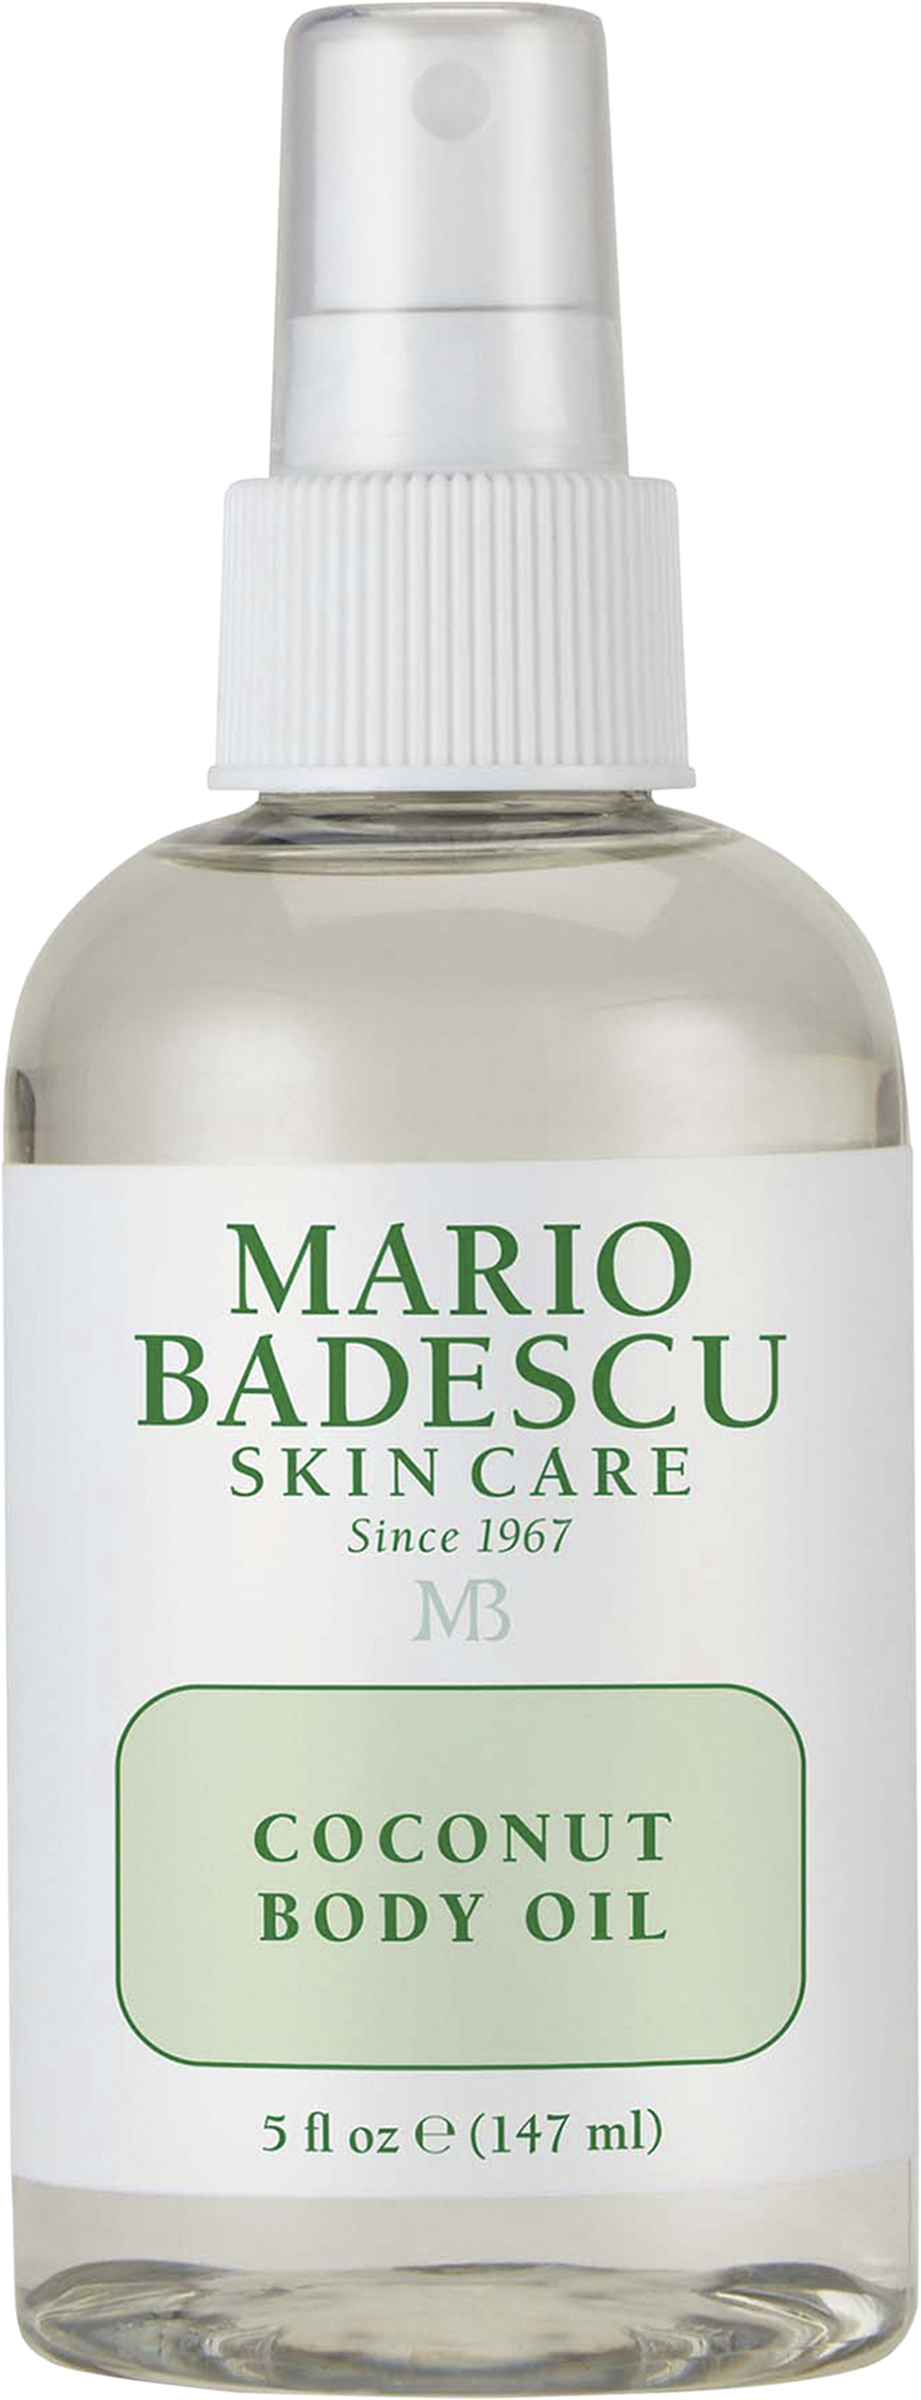 Mario Badescu Coconut Body Oil 147ml